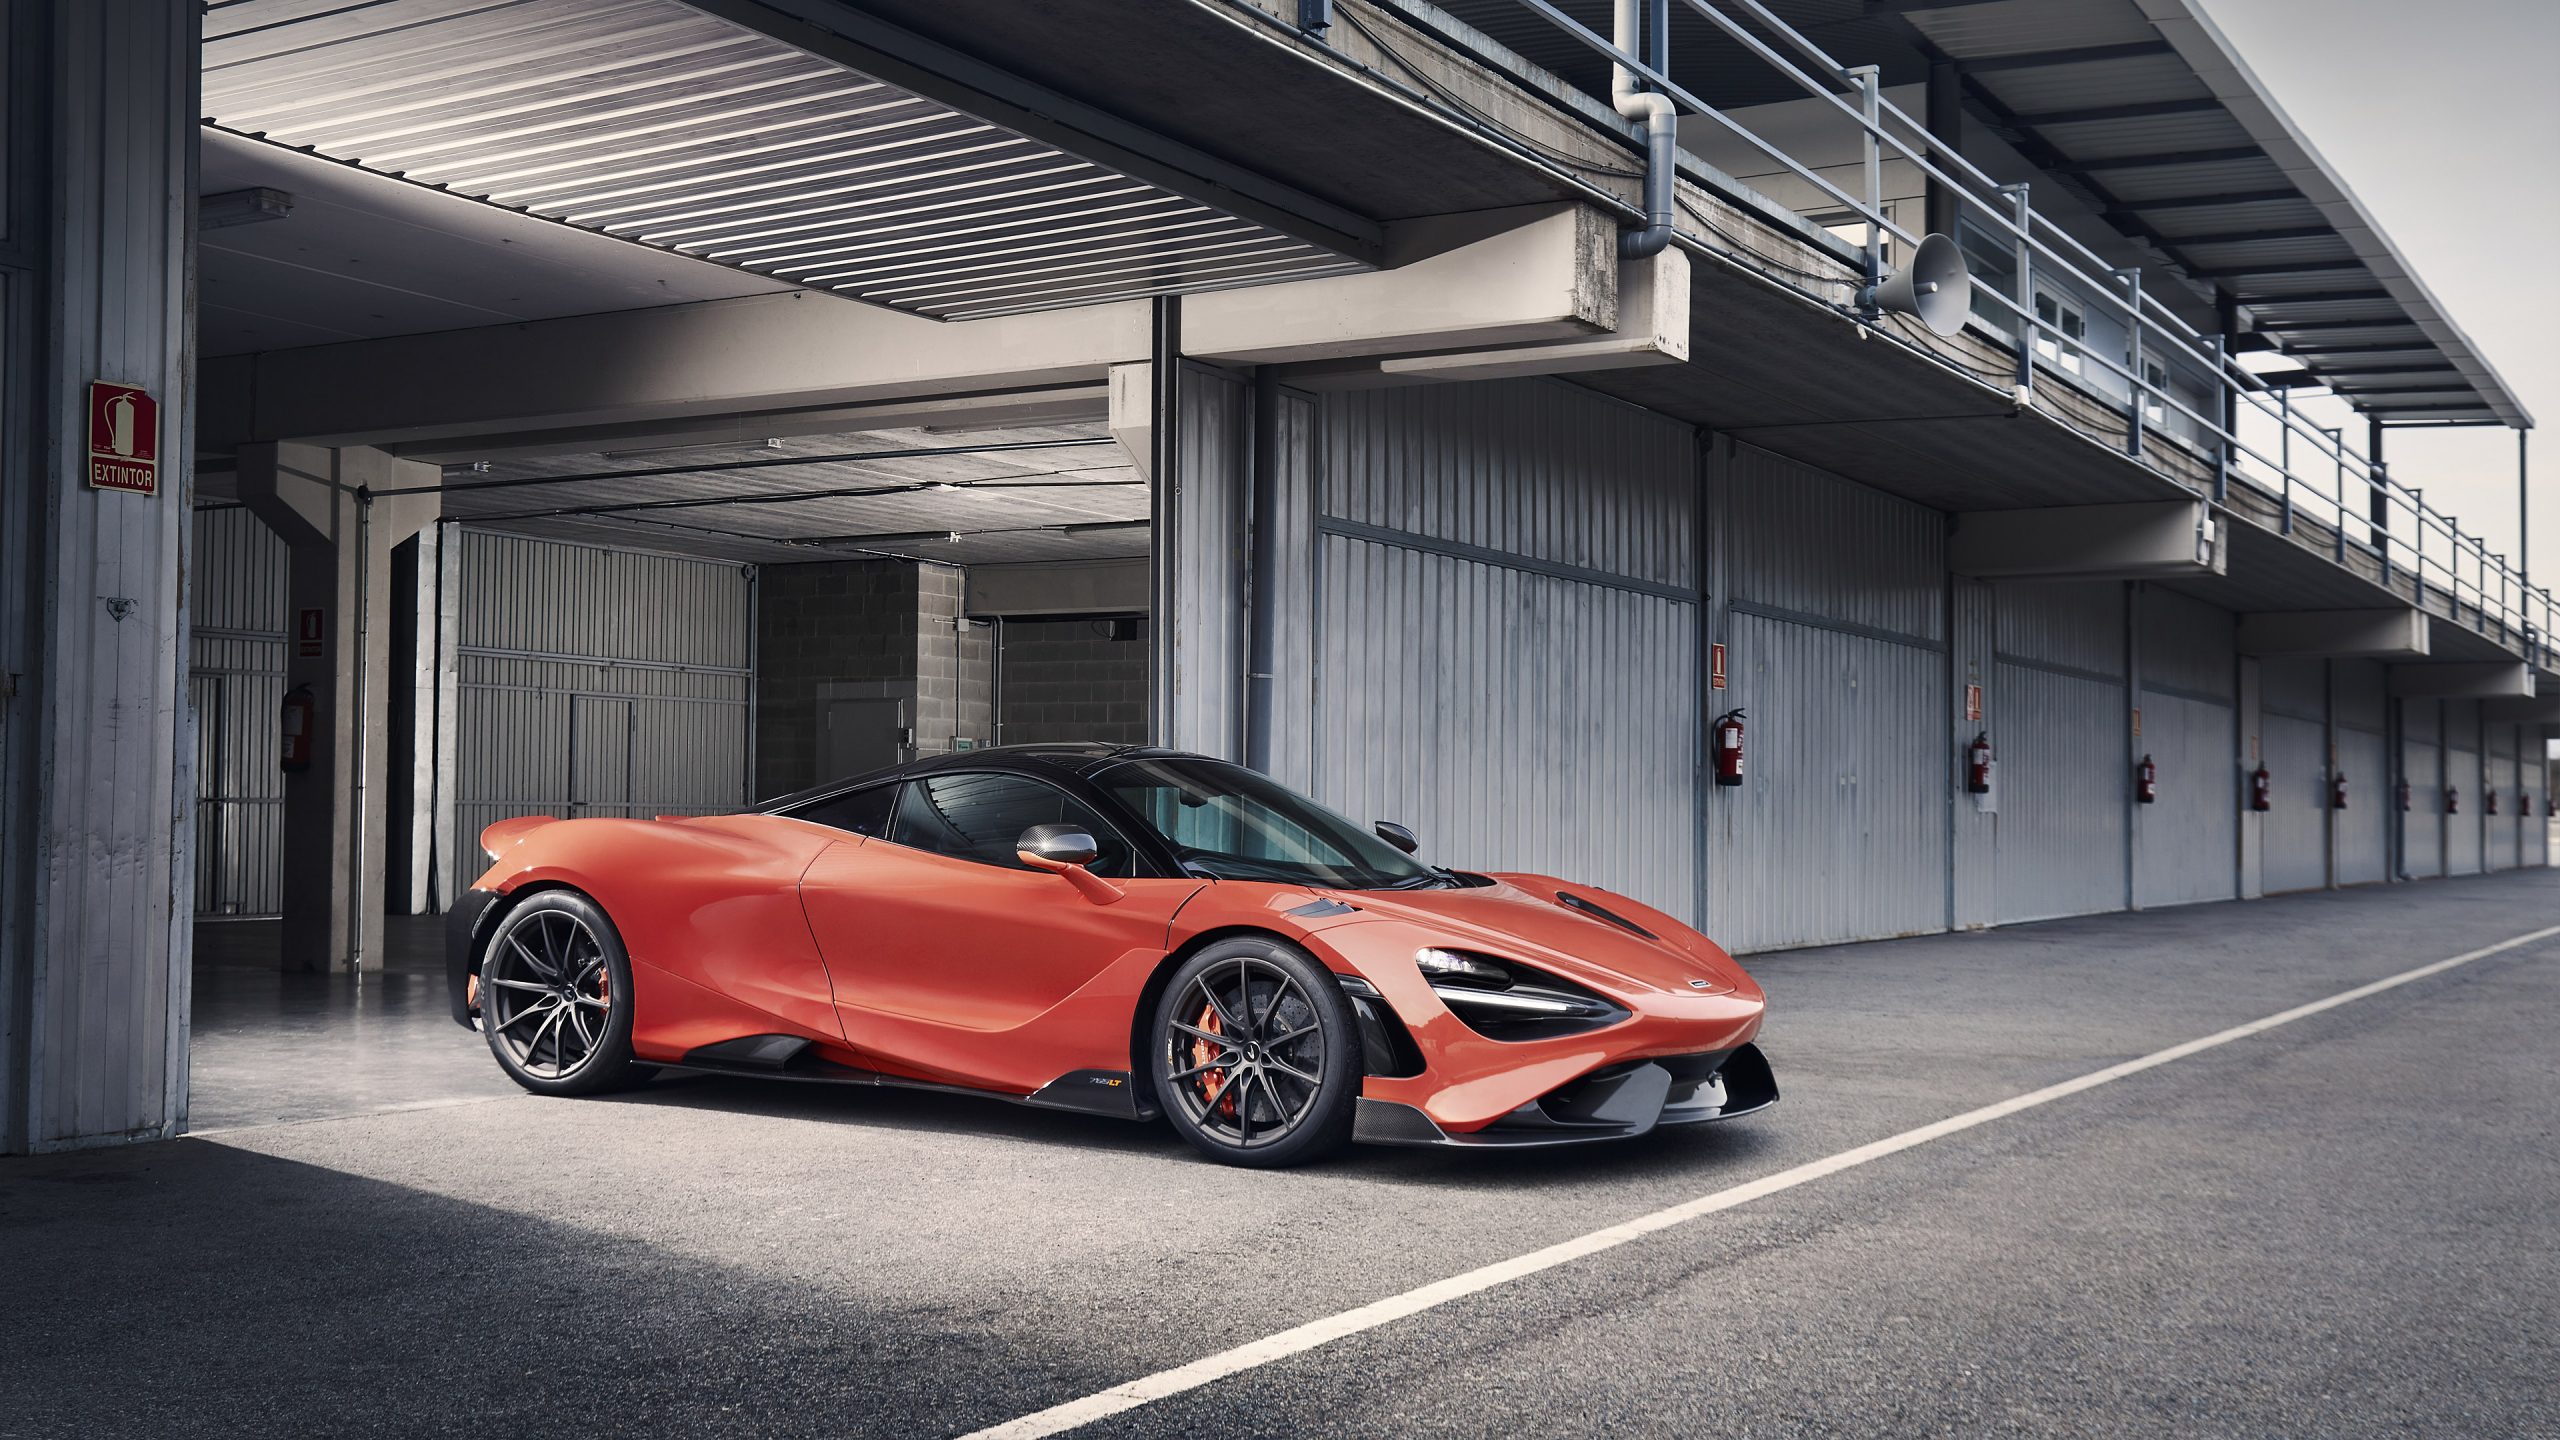 2021 McLaren 765LT review: Above and beyond - CNET